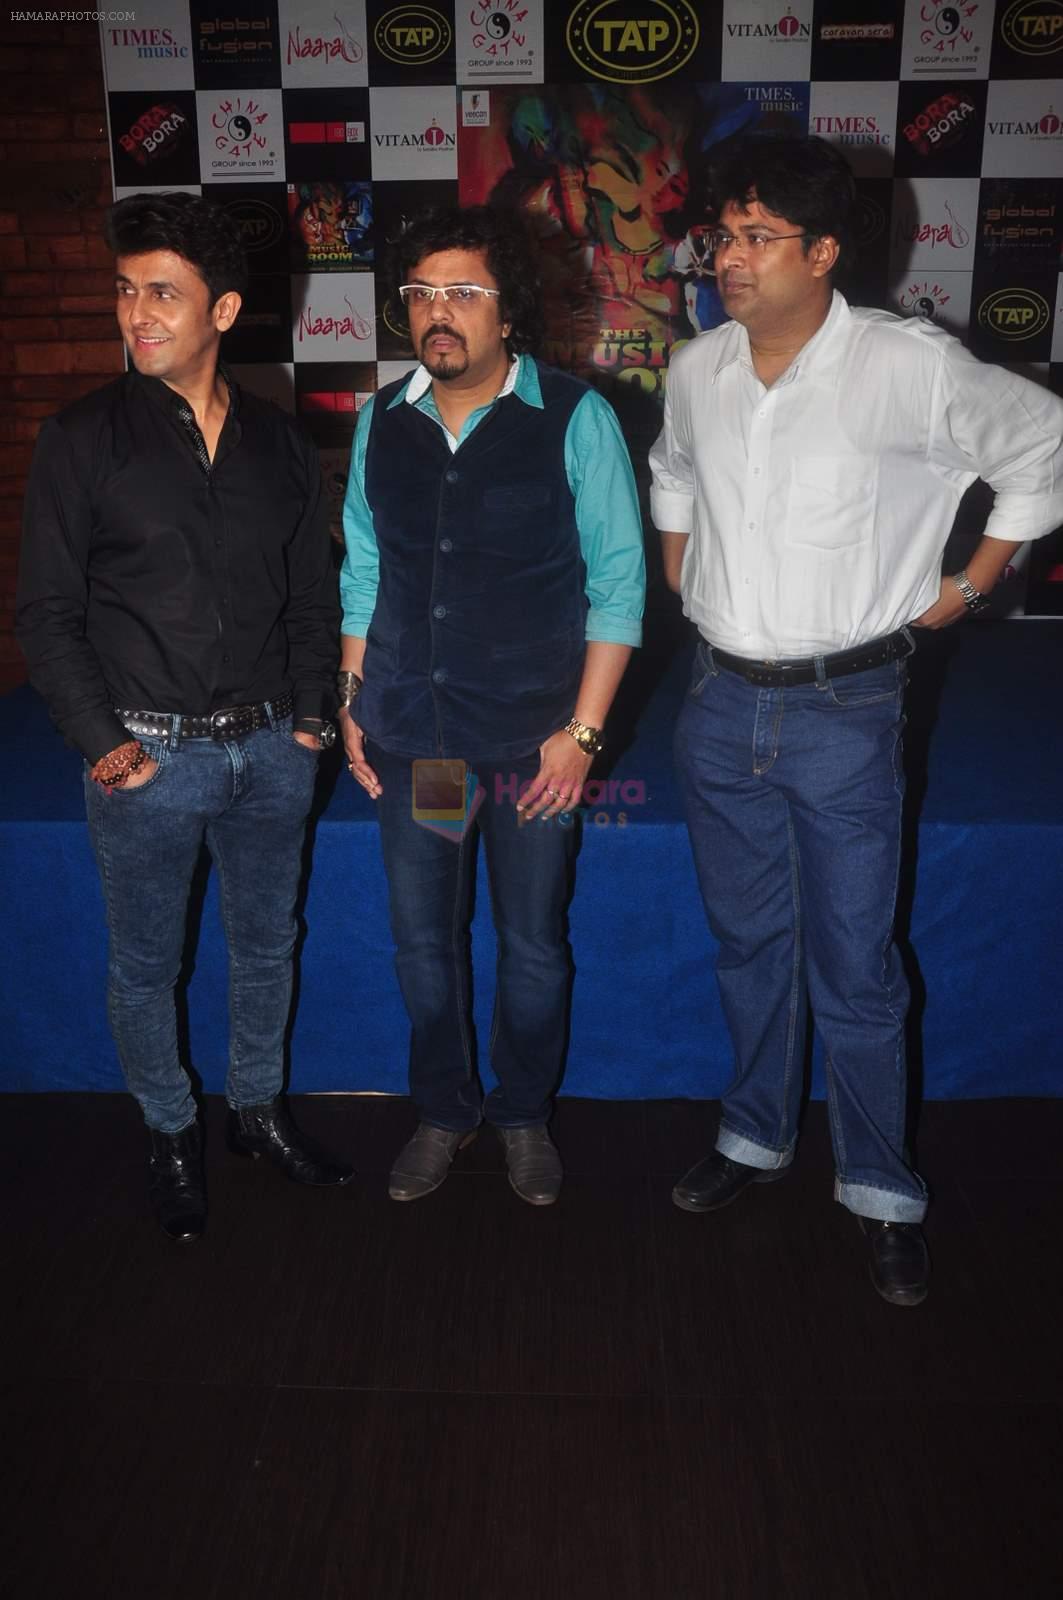 Sonu Nigam at Bickram ghosh's album launch in Tap Bar on 25th Feb 2015